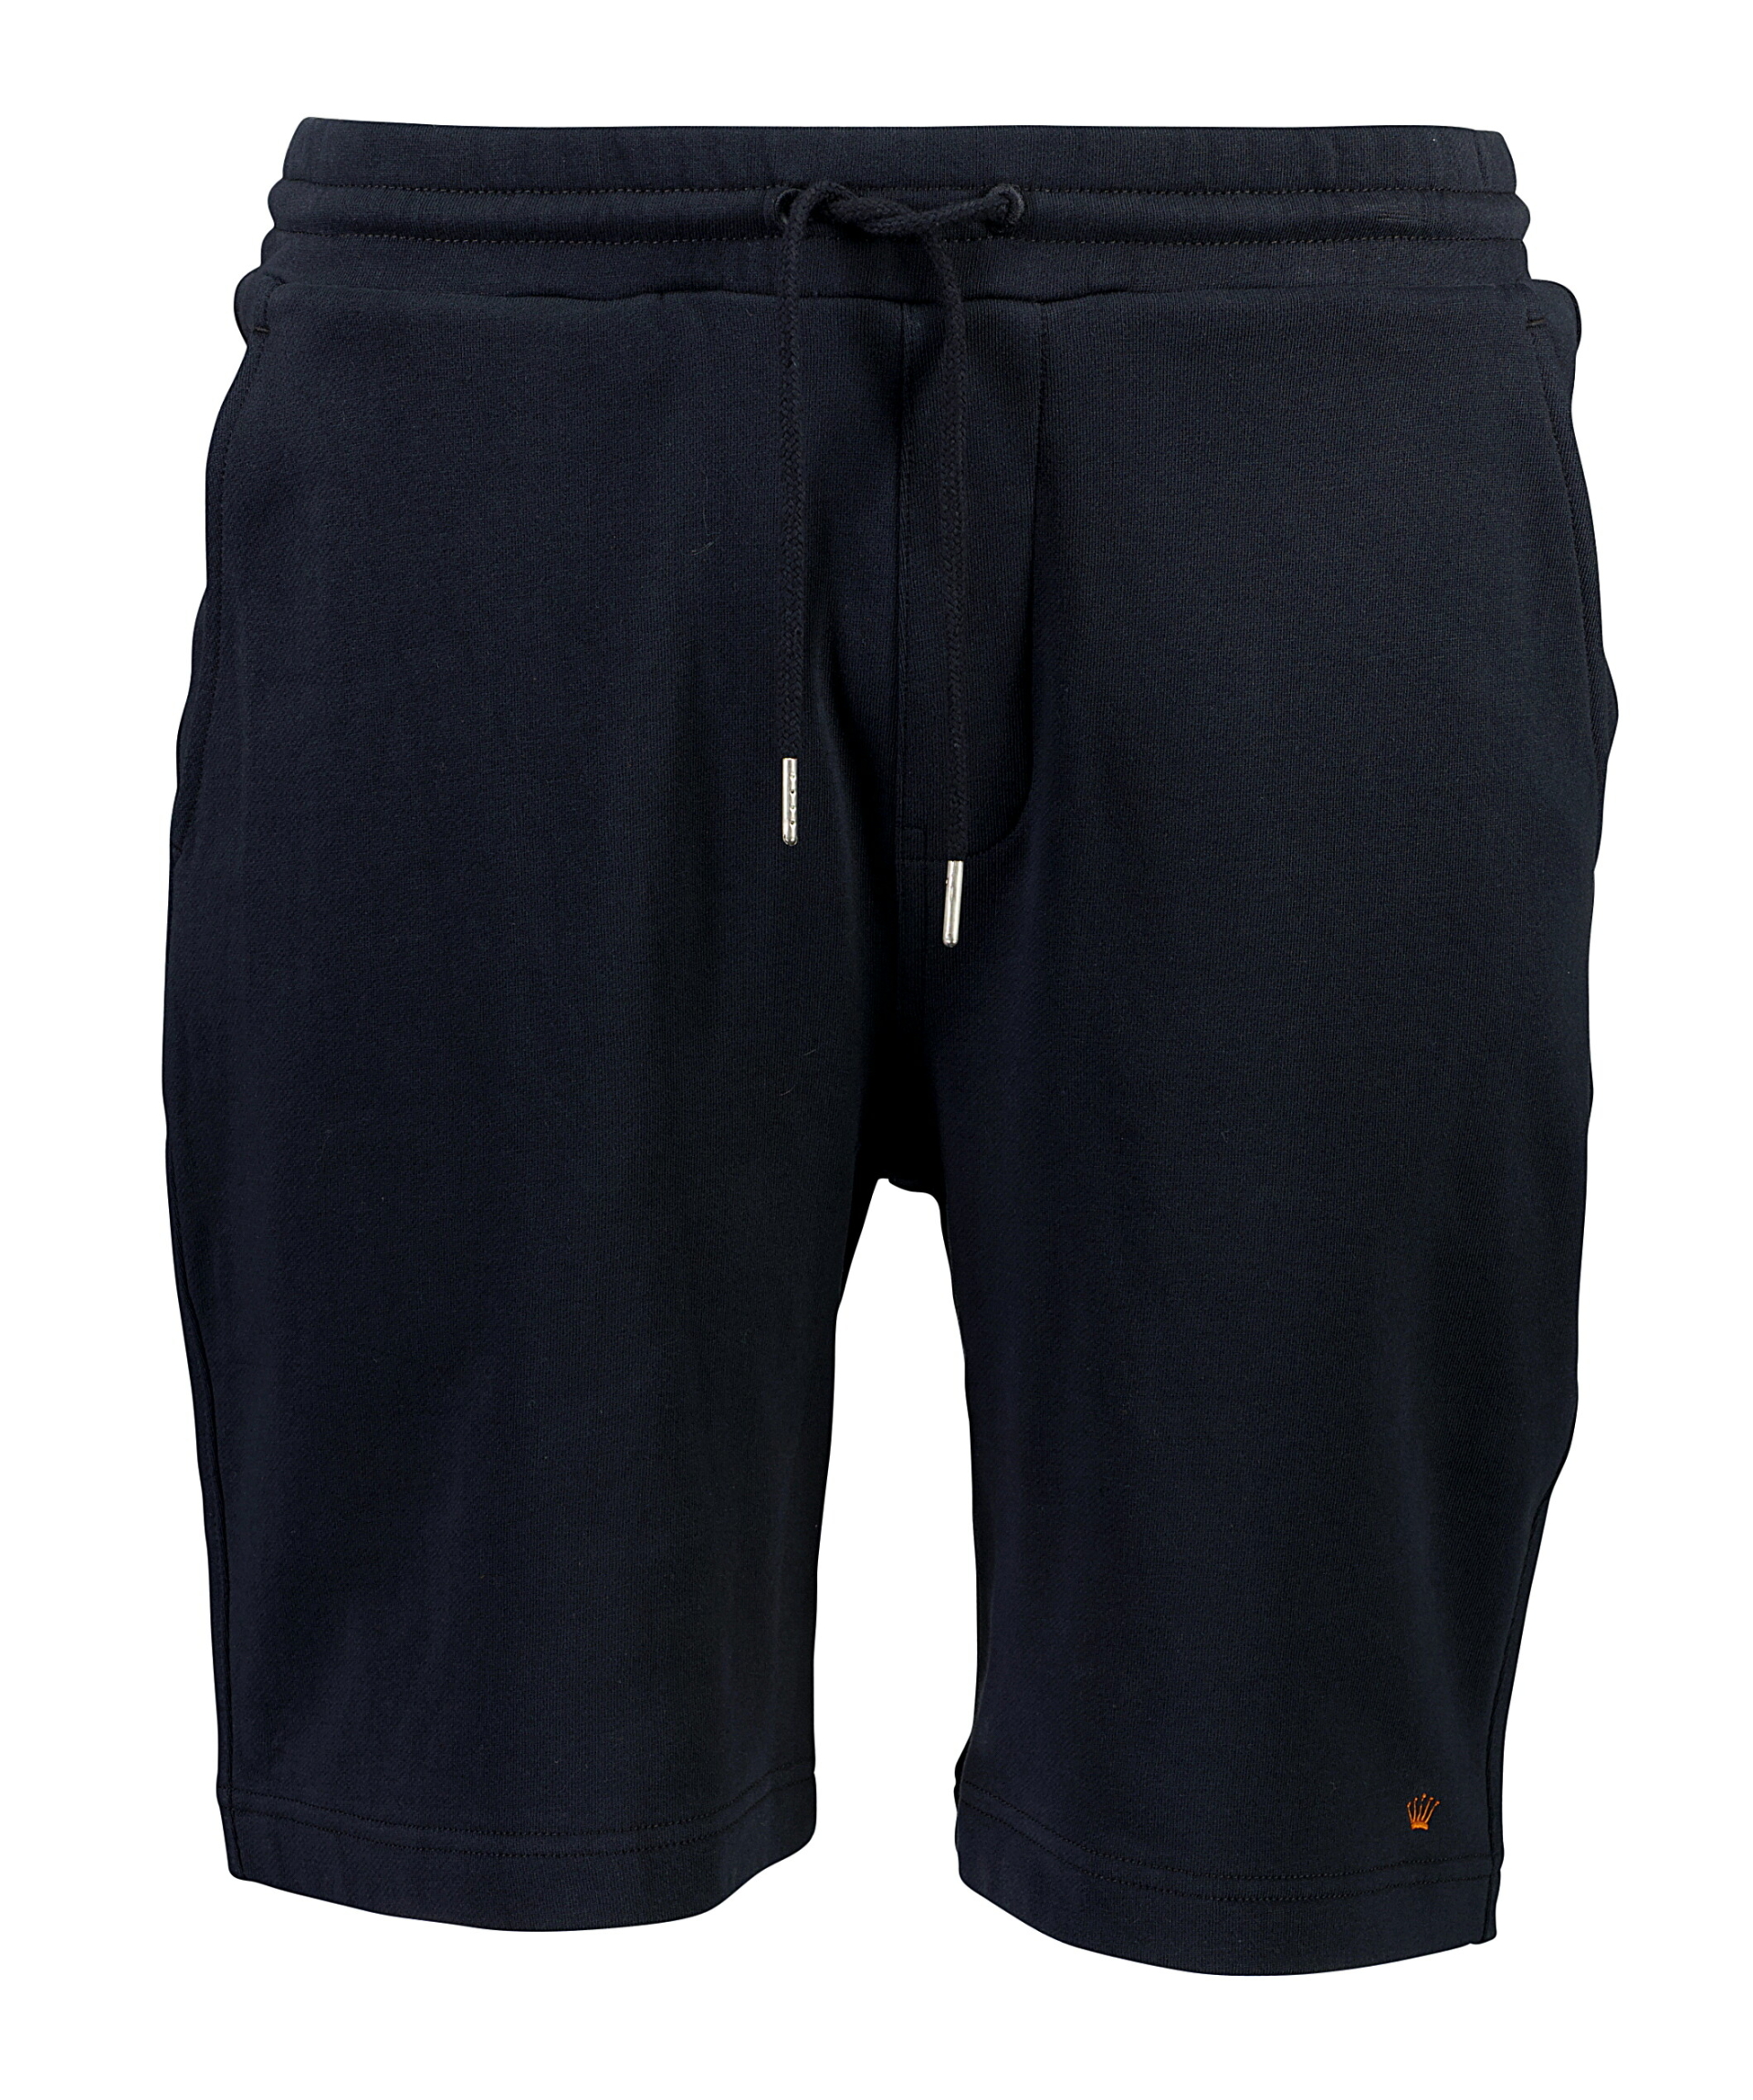 Junk de Luxe Casual shorts sort / black